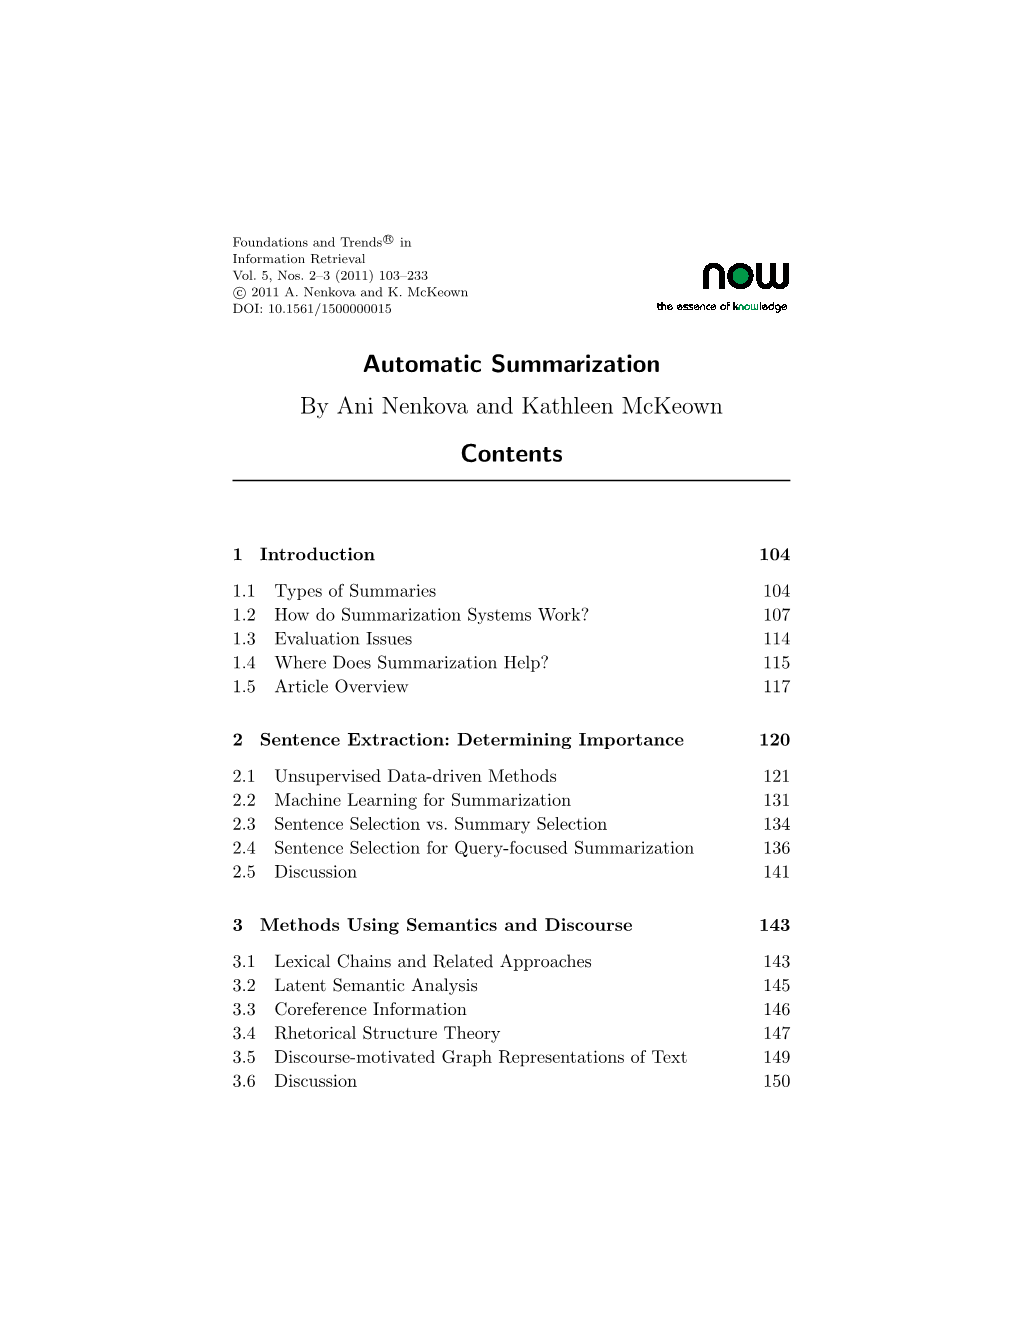 Automatic Summarization by Ani Nenkova and Kathleen Mckeown Contents